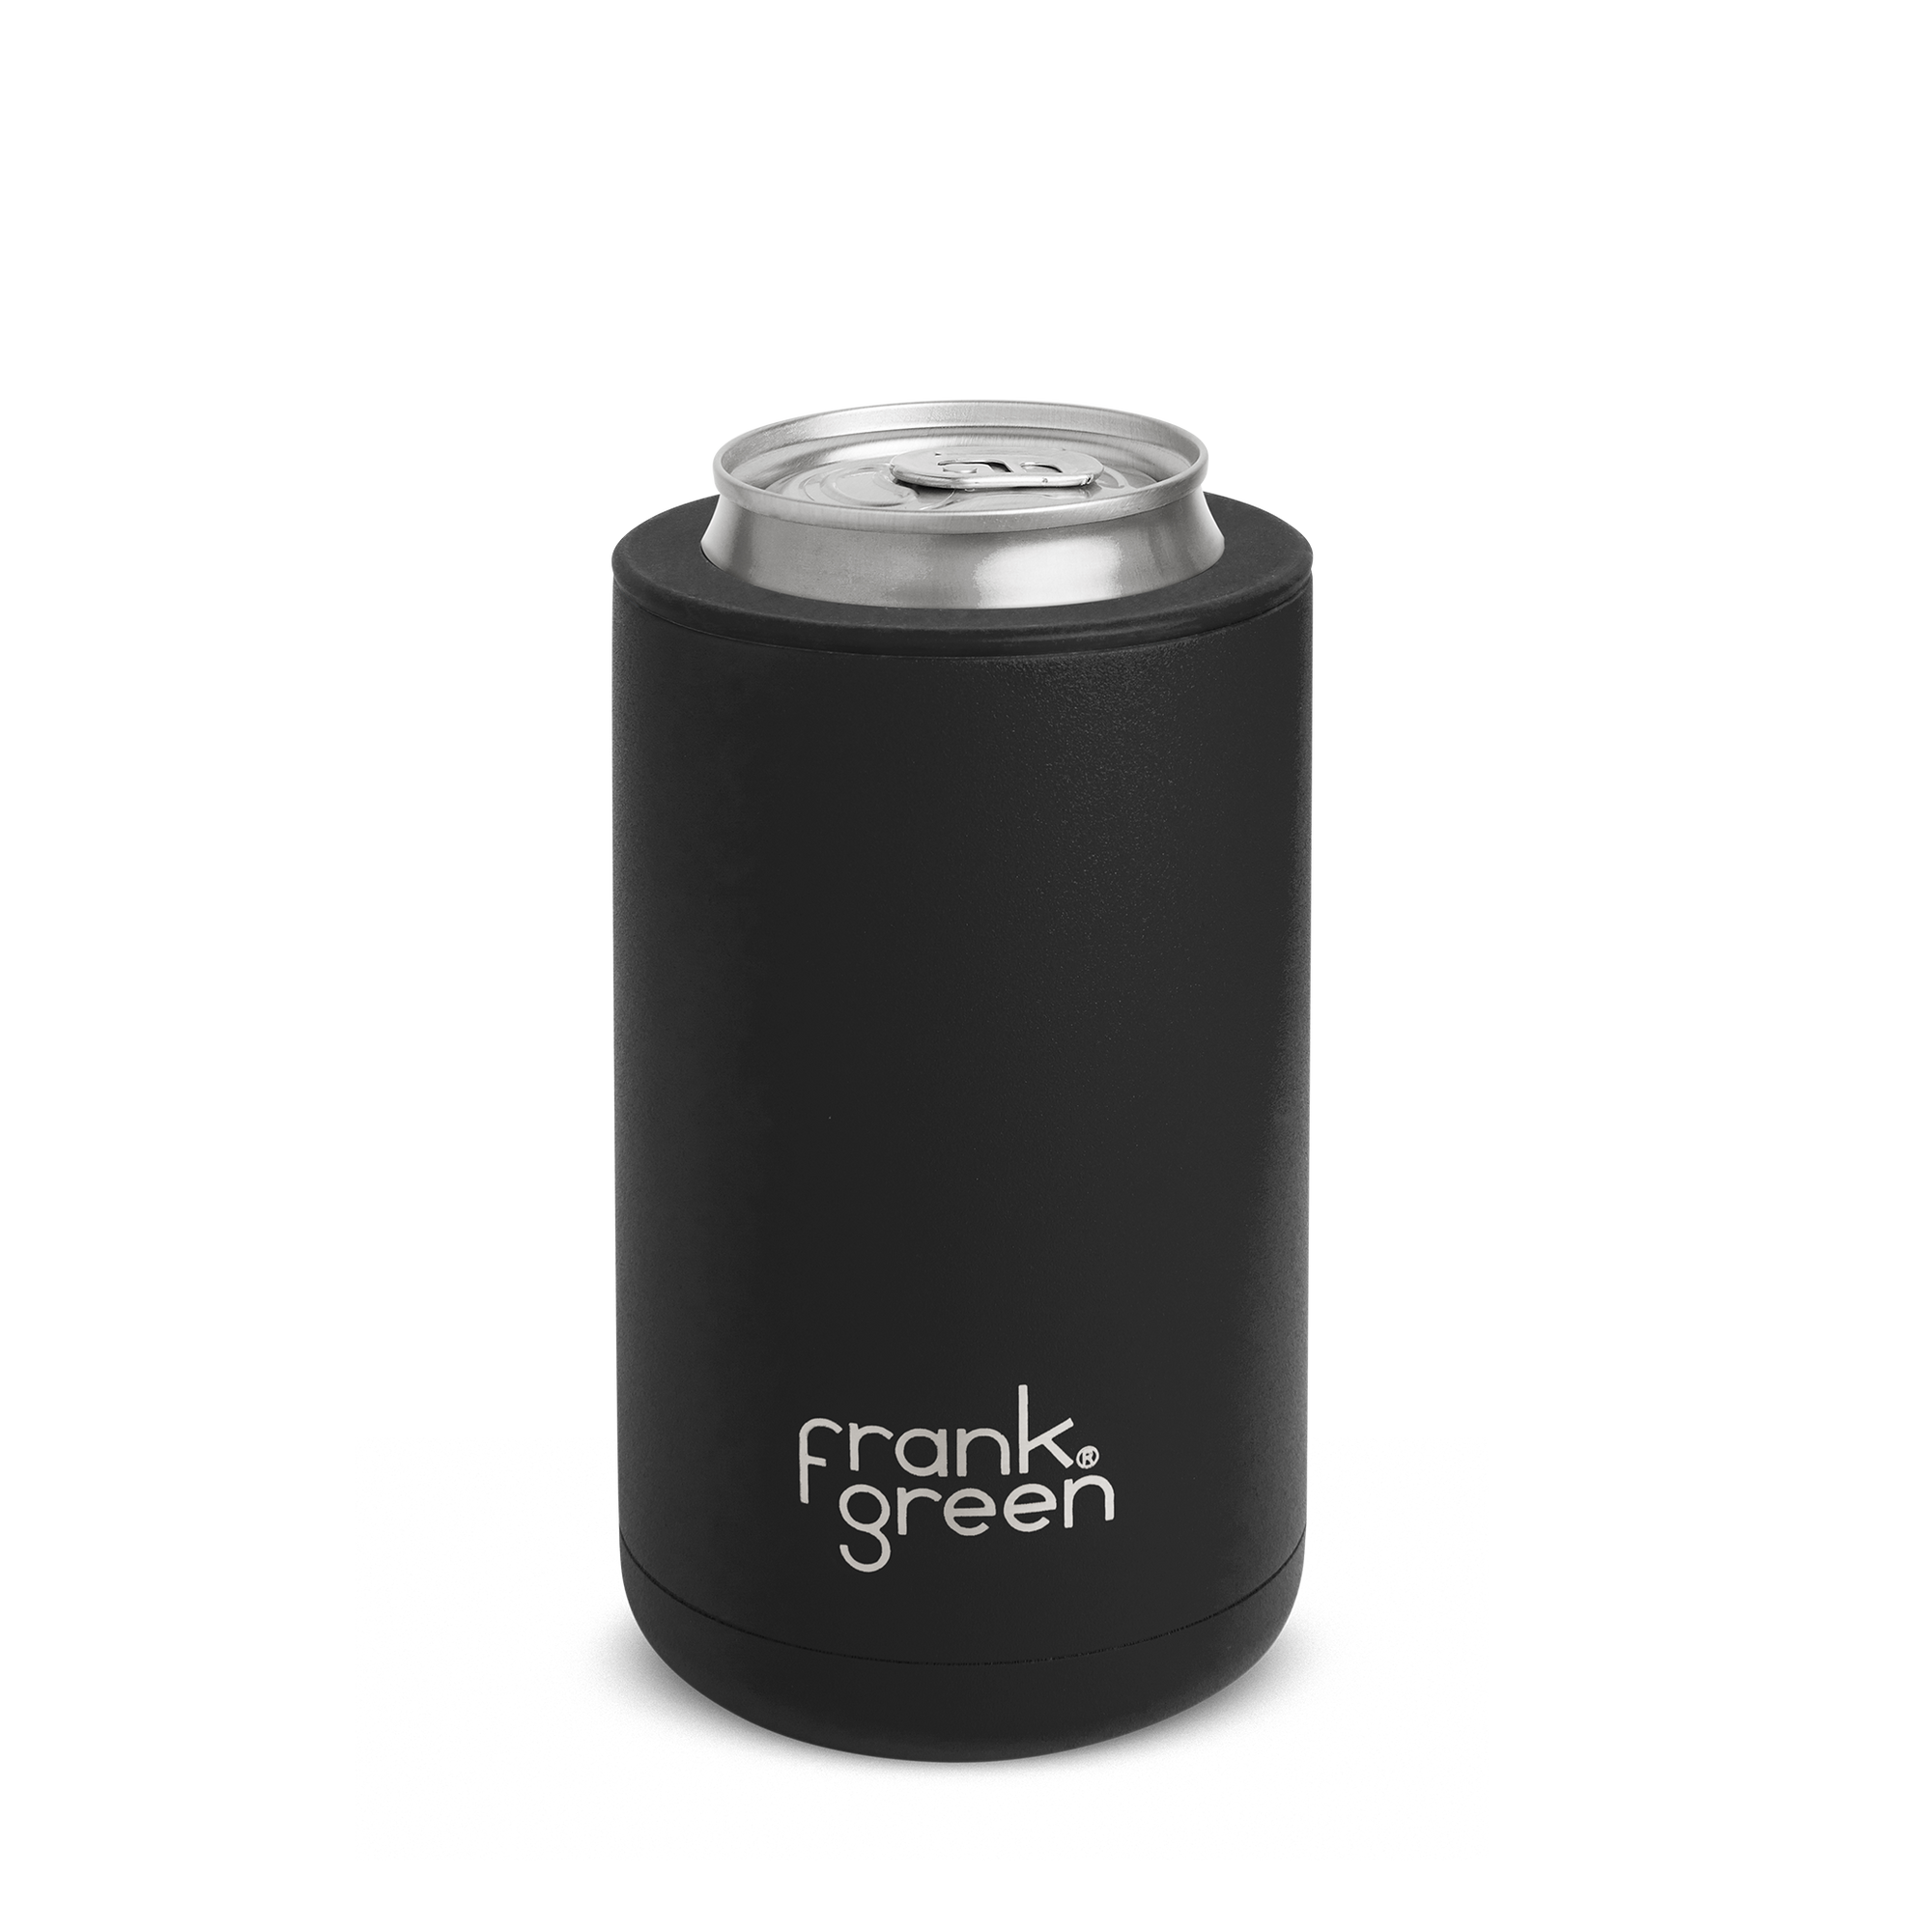 DAD Personalized Beverage Holder  Insulated Beverage Holder – Firebird  Group, Inc.